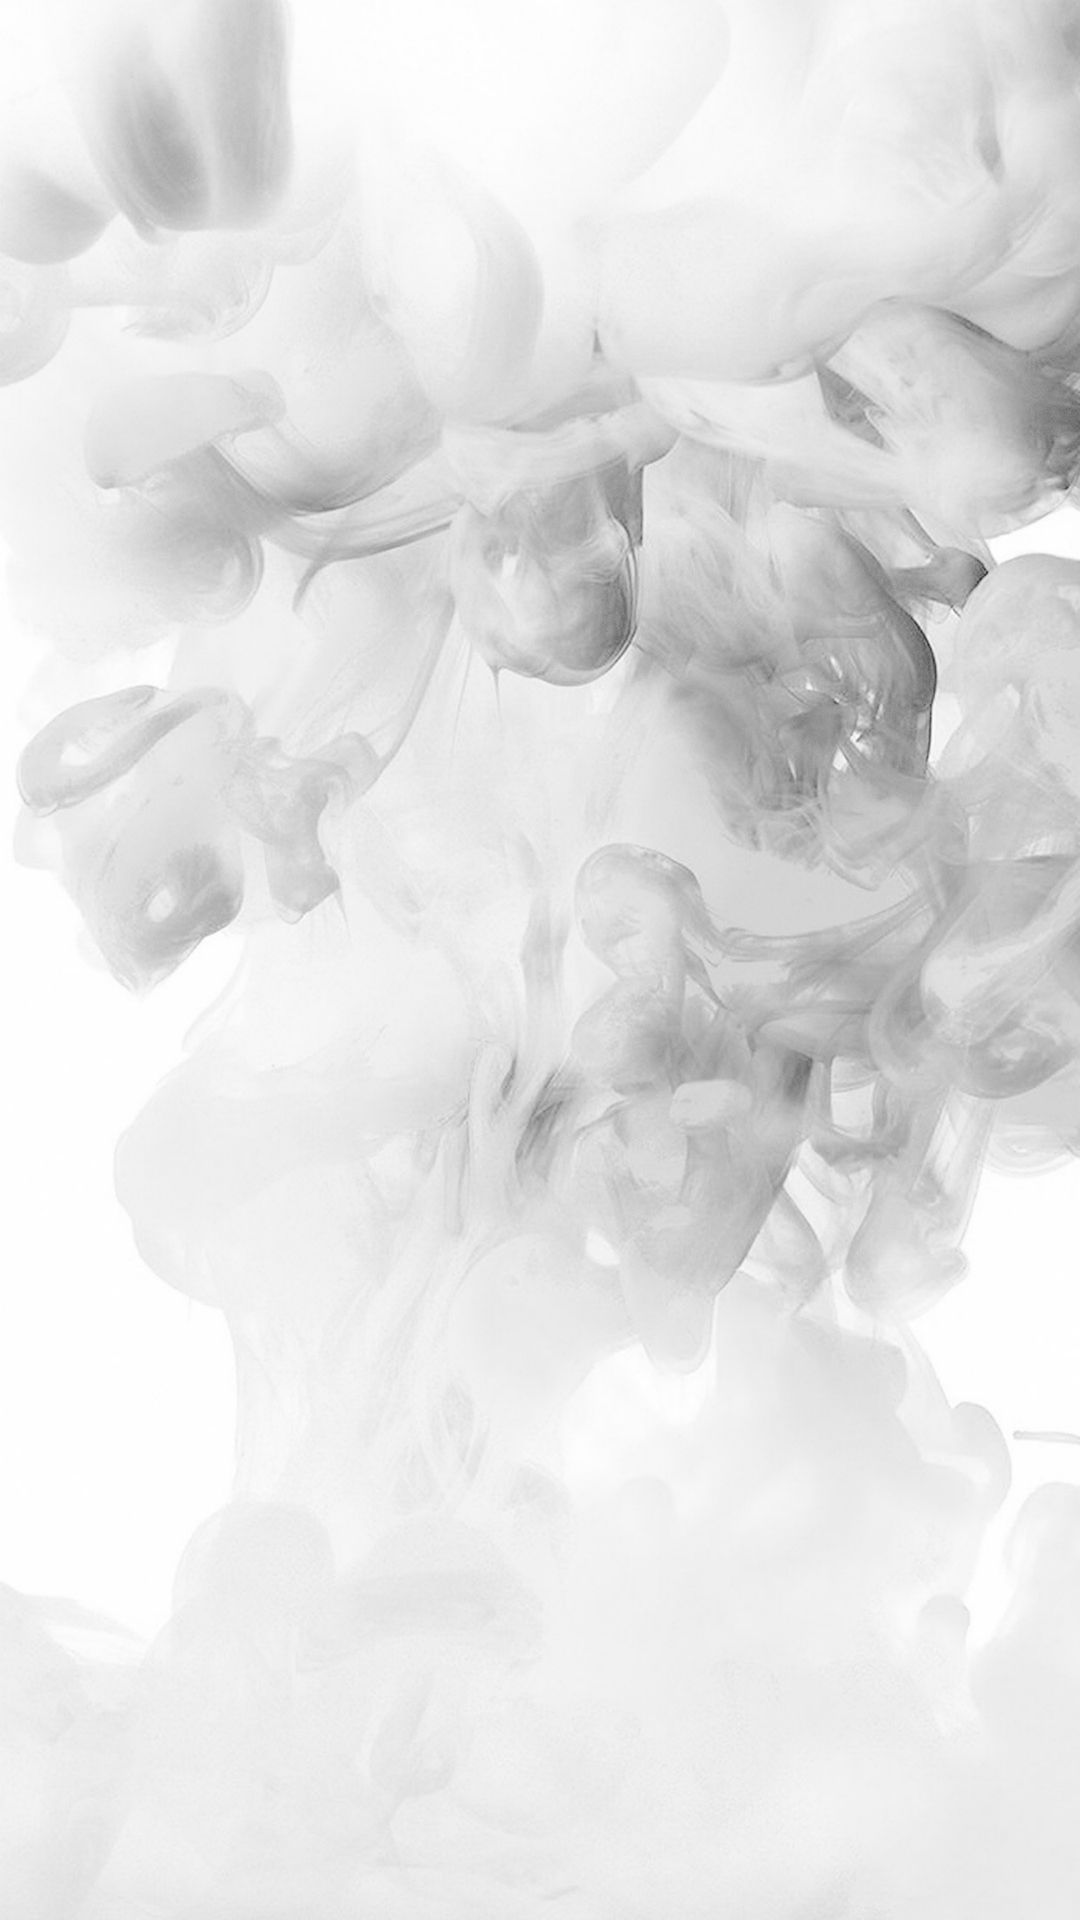 Smoke White Abstract Fog Art Illust fondo de pantalla para iPhone 6 | niebla en 2019